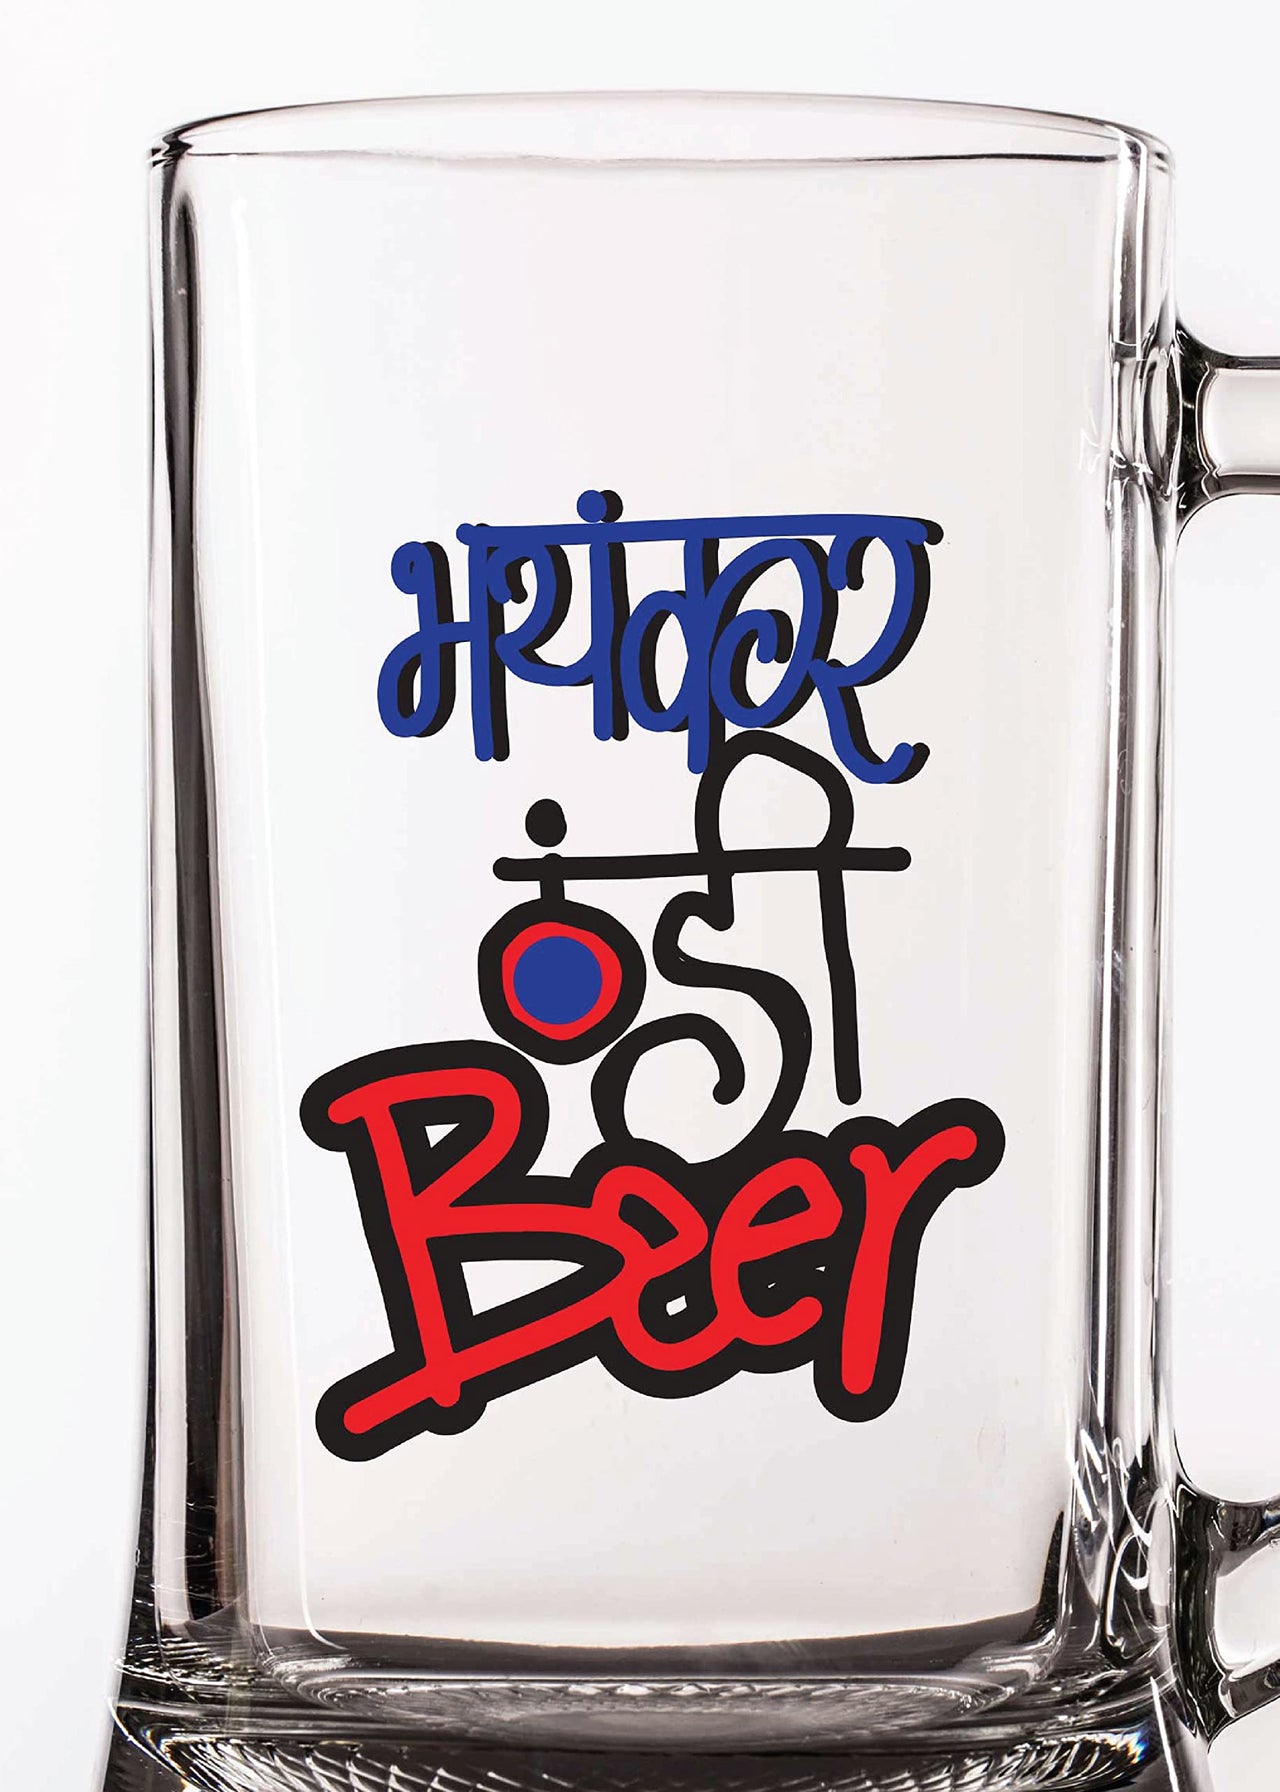 Thandi Beer - Beer Mug - 1 Piece, Clear, 500 ml - Transparent Glass Beer Mug -Printed Beer Mug with Handle Gift for Men, Dad